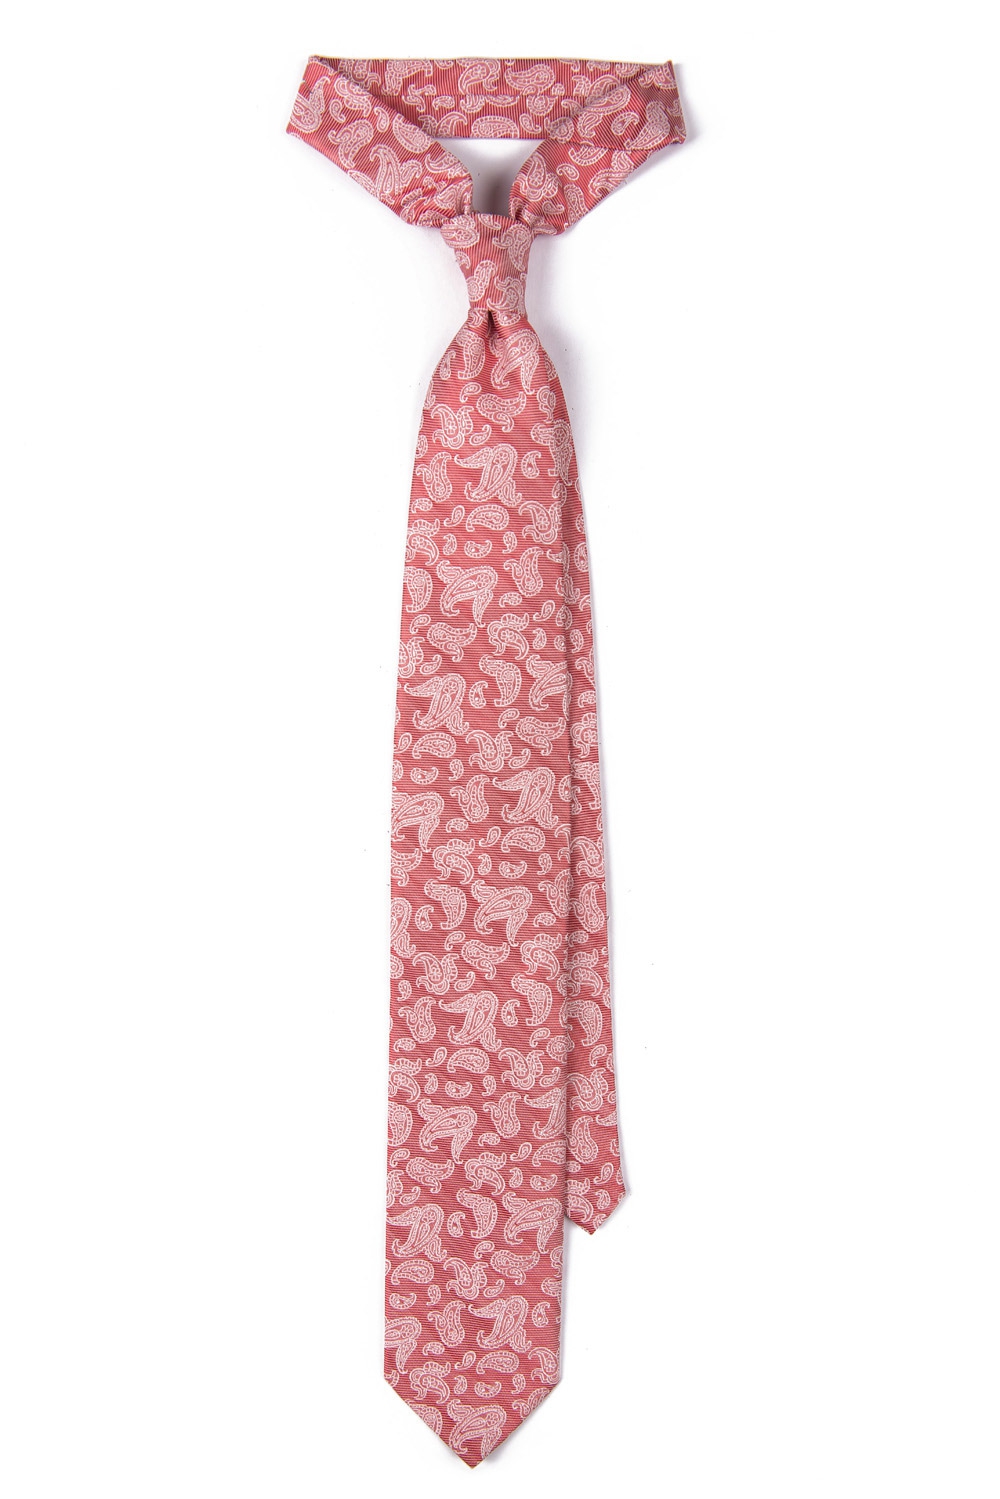 Cravata poliester rosie print floral 0